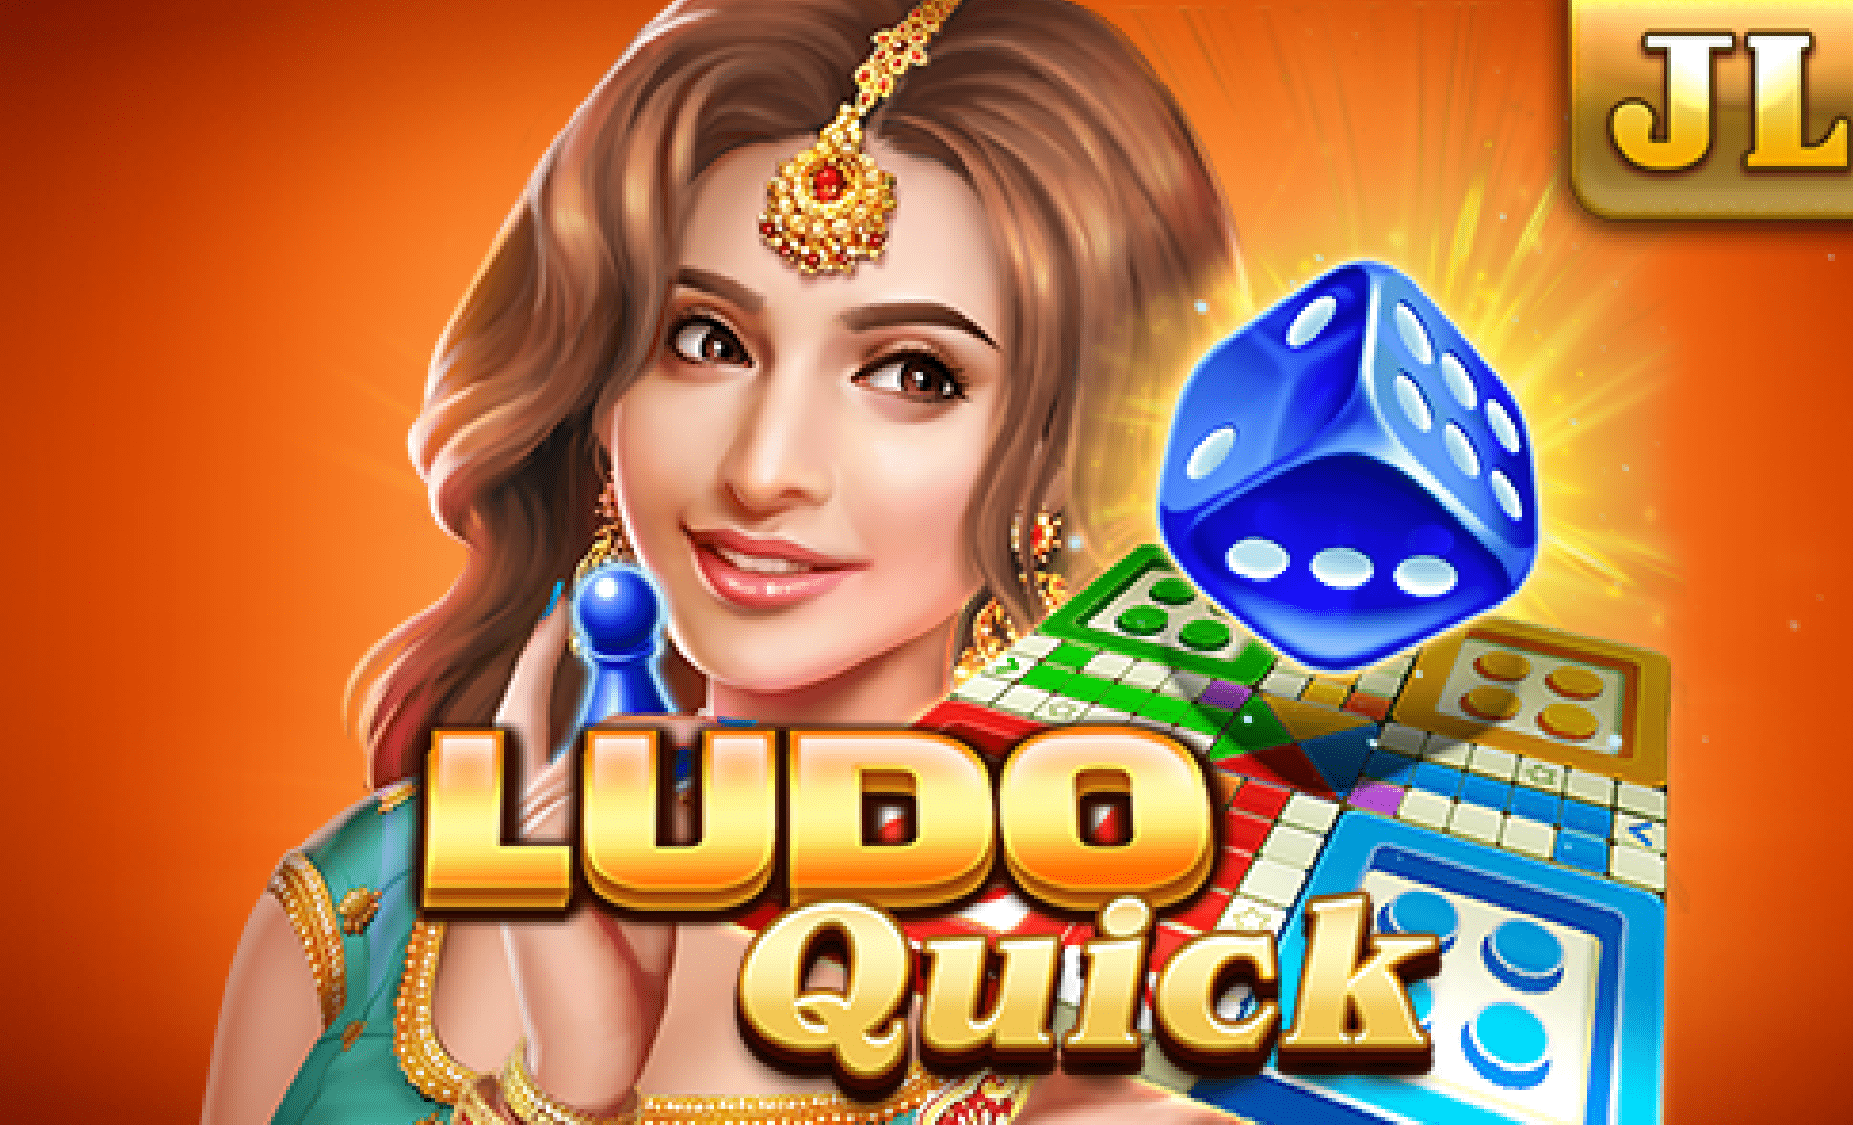 Ludo Quick by Jili Games